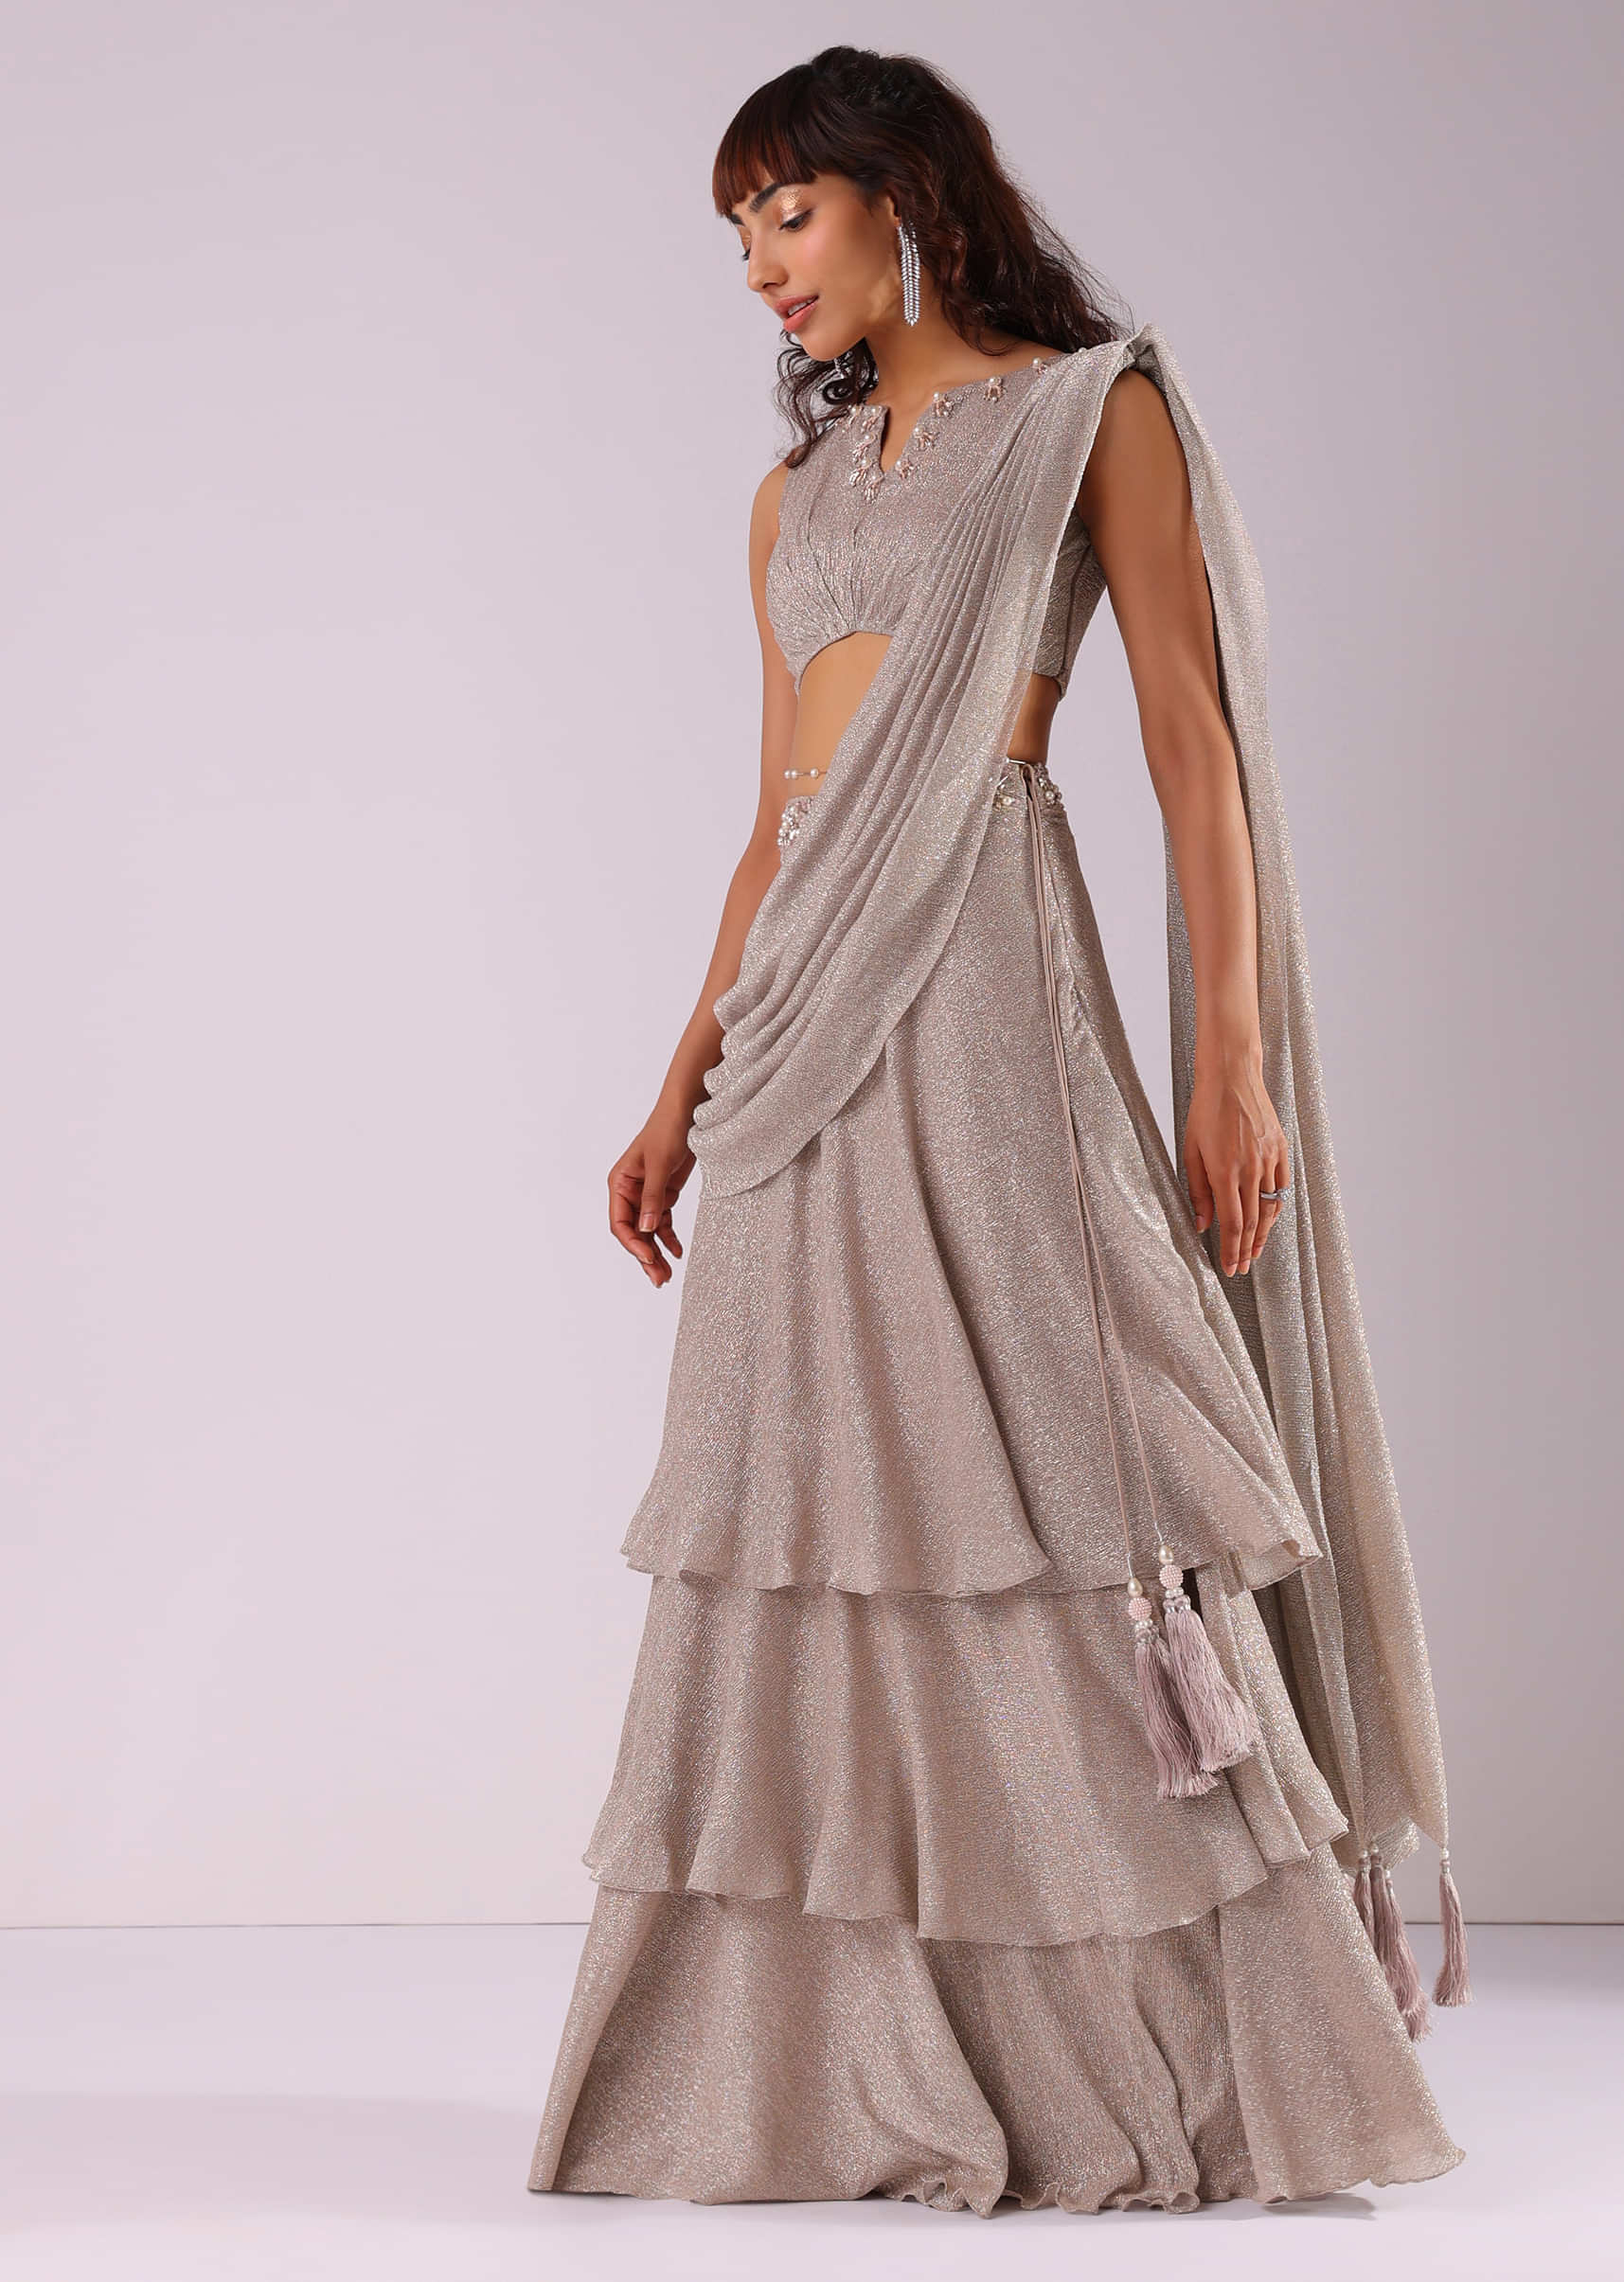 Designerkloth - Lehenga for Women Party wear - Free shipping